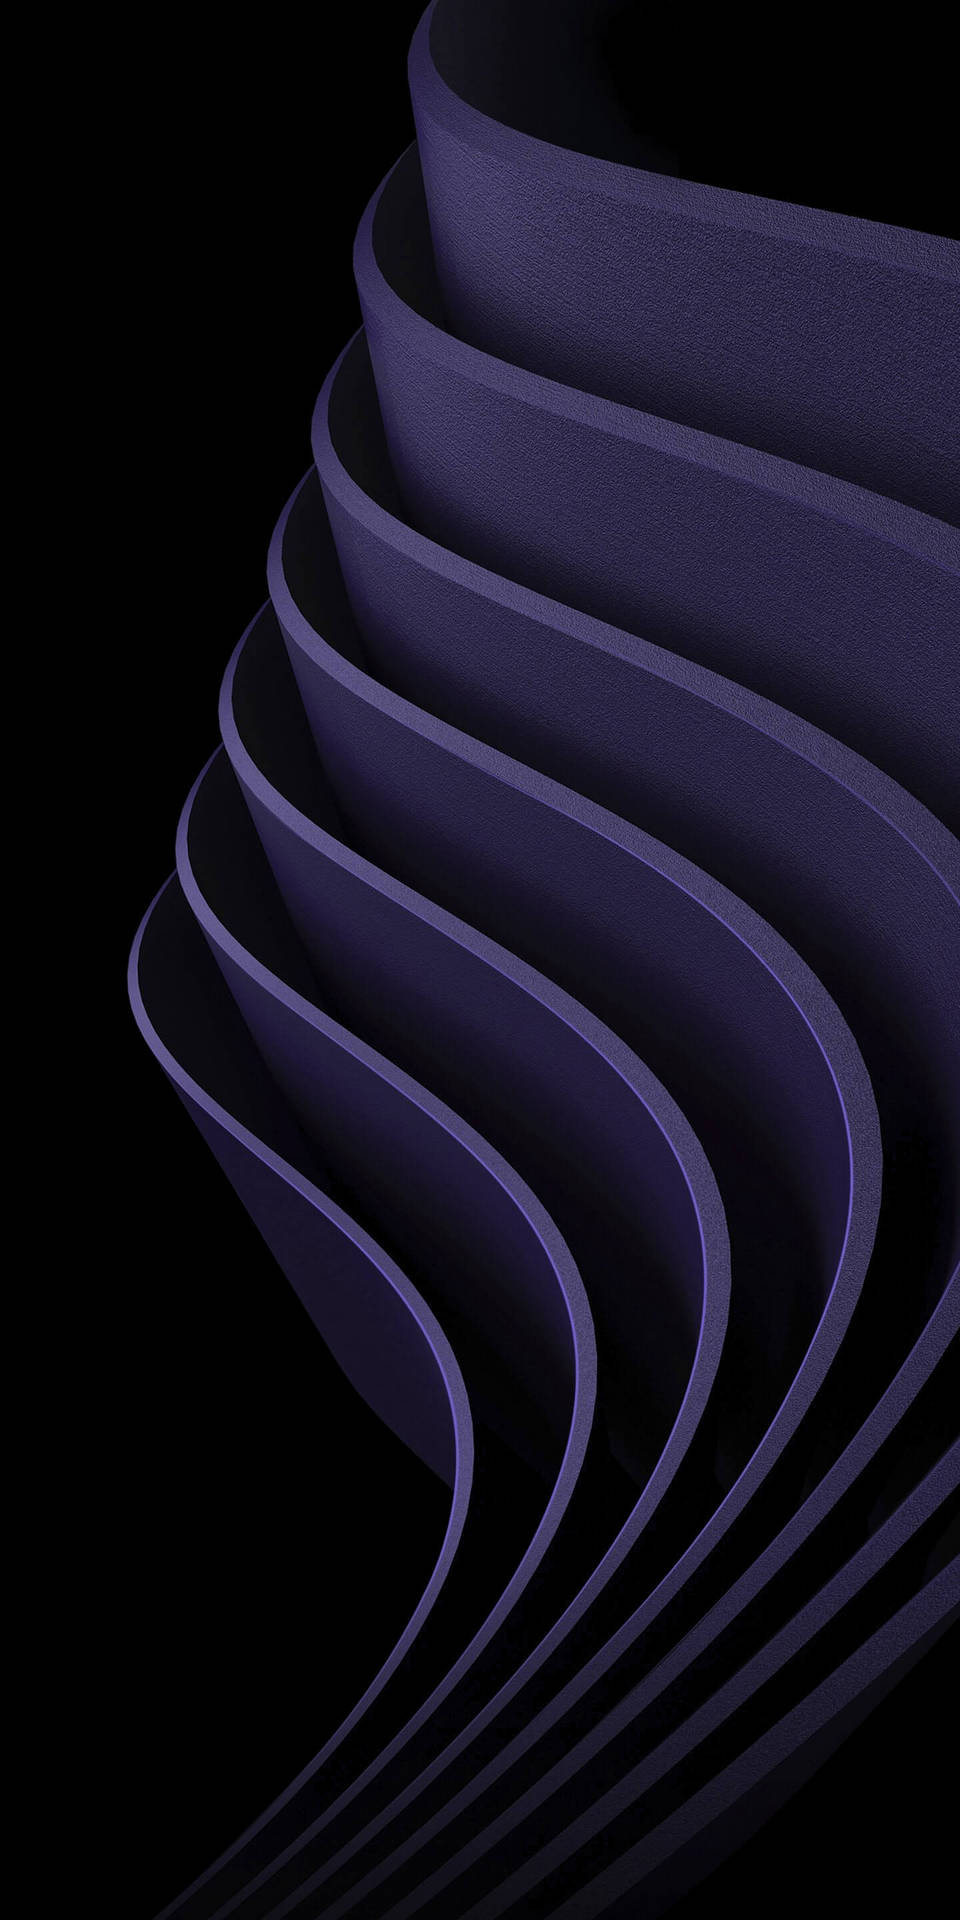 Mesmerizing Dark Purple Iphone Xs Max Oled Display Background